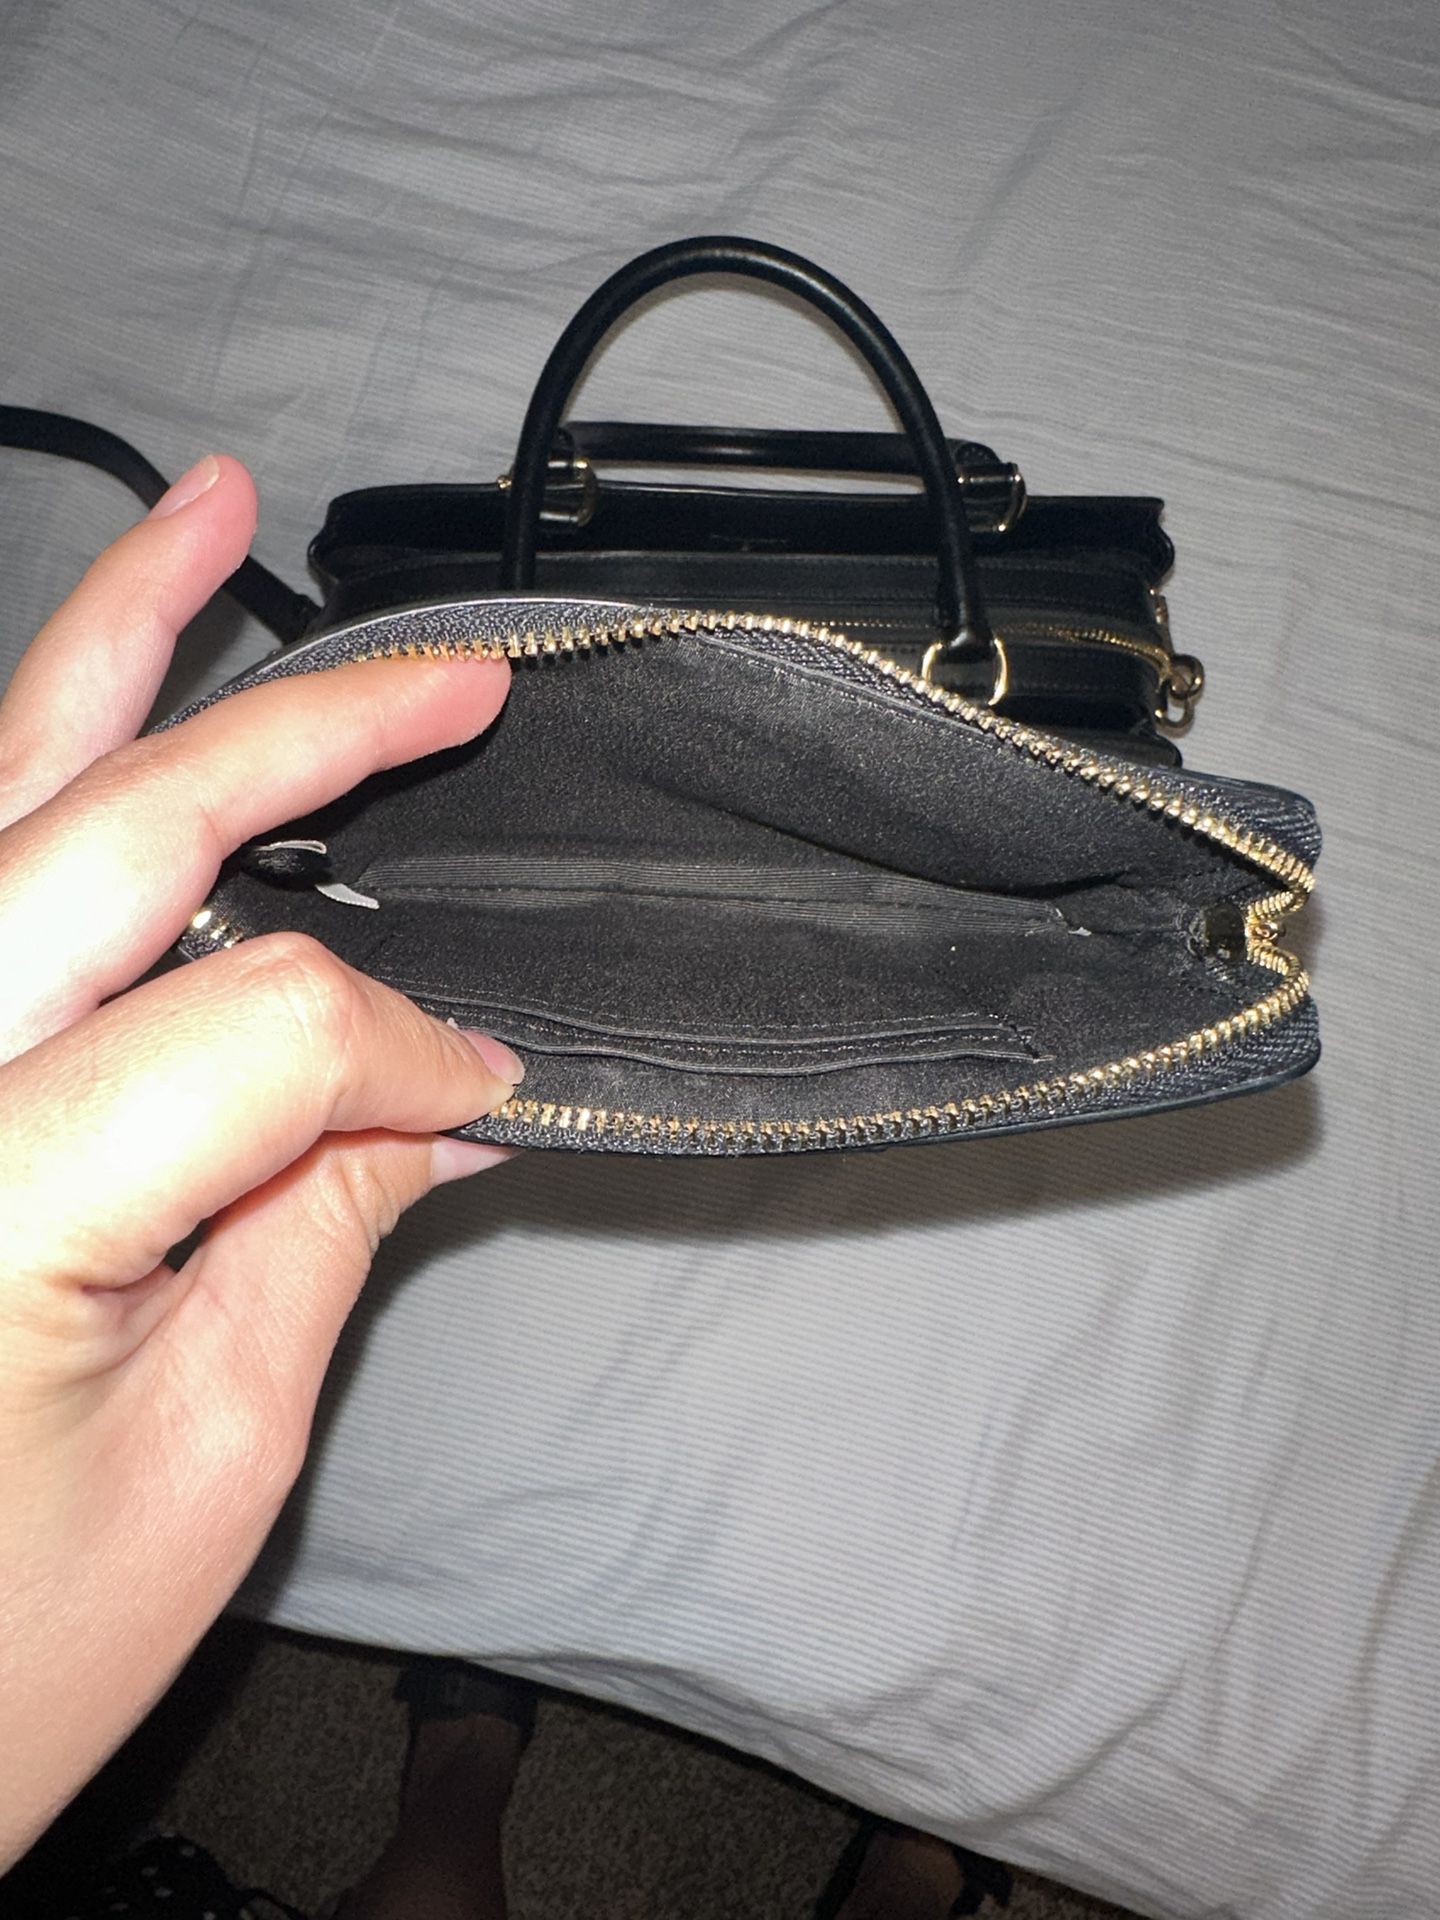 Coach purse & wallet